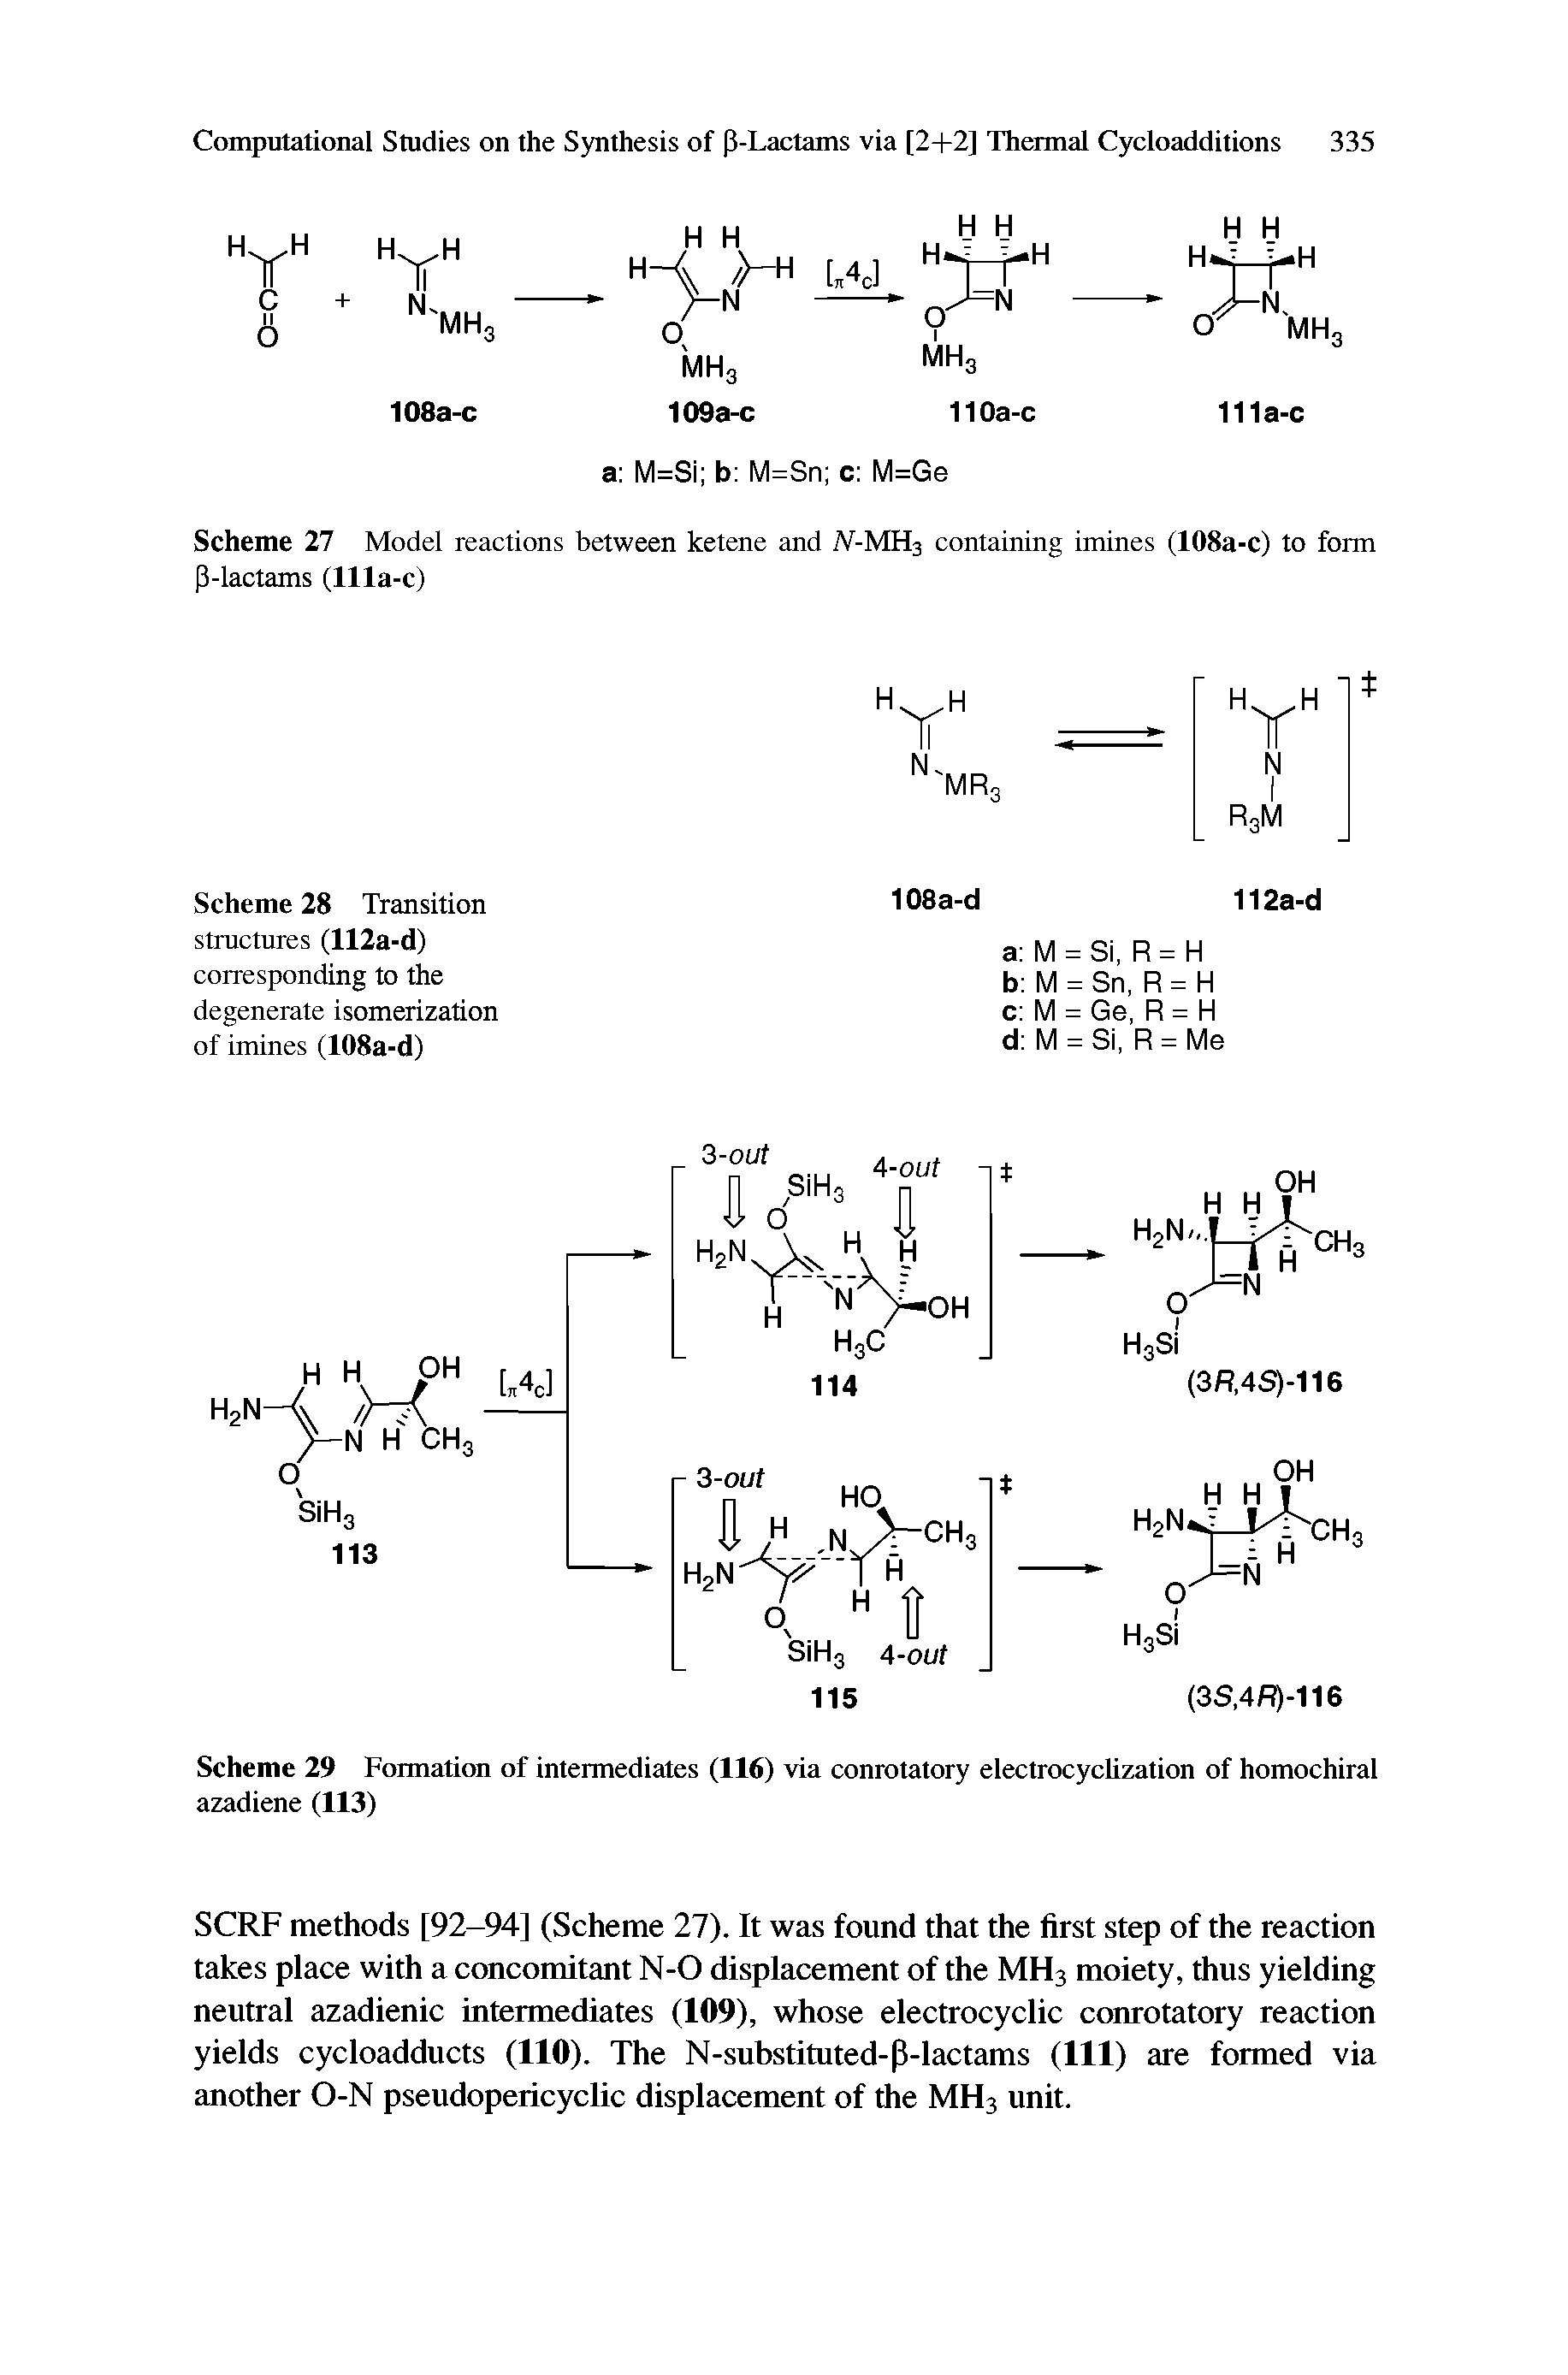 Scheme 29 Formation of intermediates (116) via conrotatory electrocyclization of homochiral azadiene (113)...